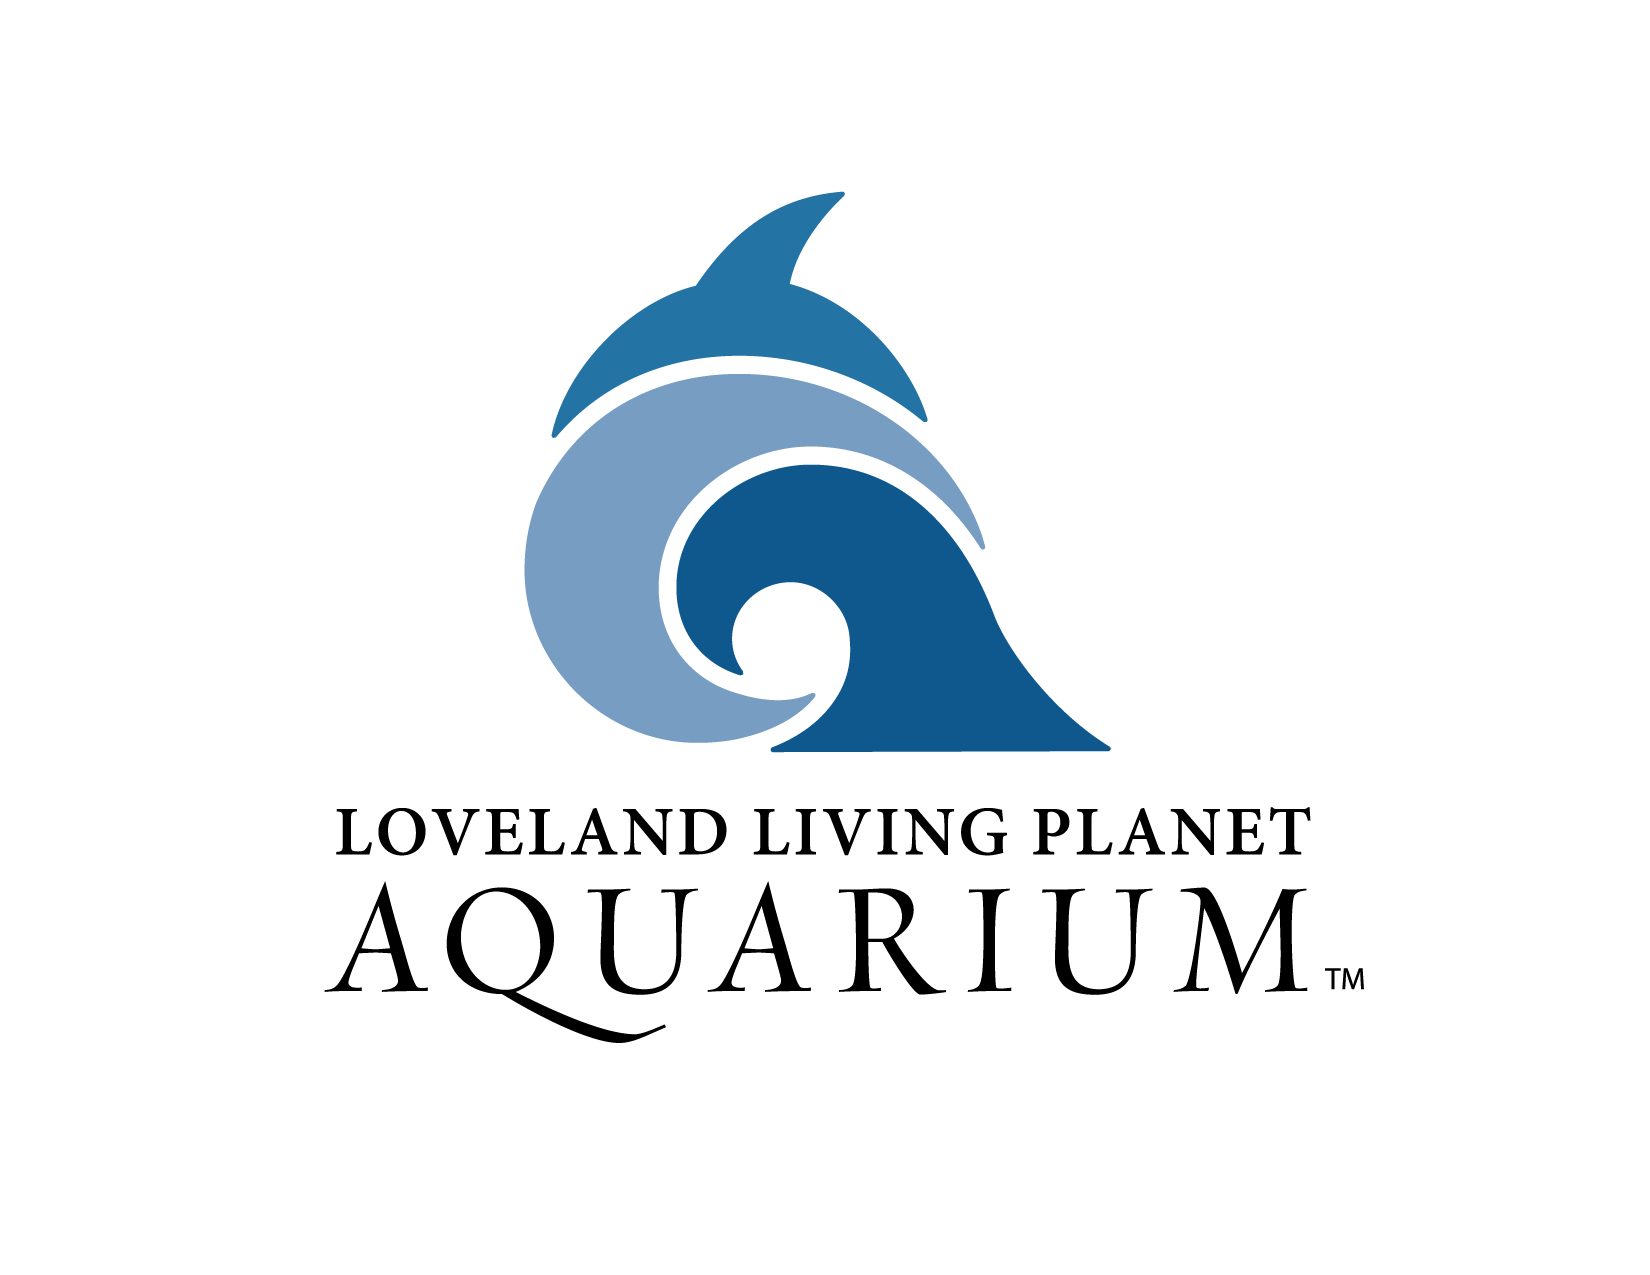 The Loveland Living Planet Aquarium logo